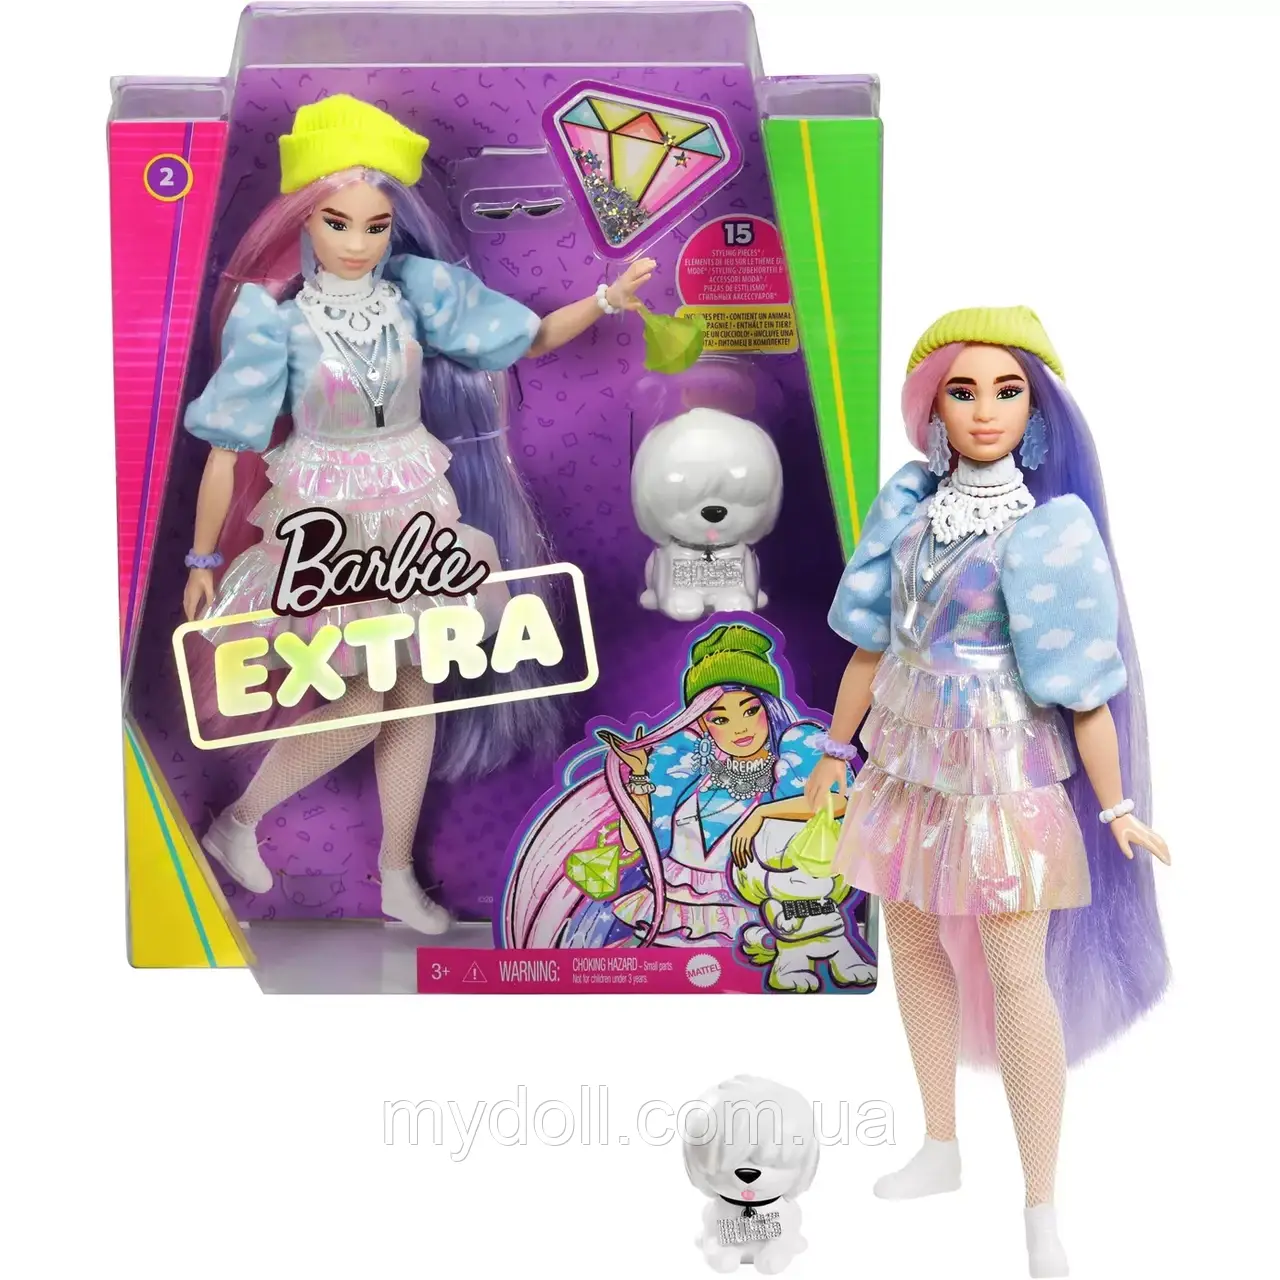 Лялька Барбі Екстра в салатовій шапочці GVR05 Barbie Extra Doll #2 in Shimmery Look with Pet Puppy Оригінал